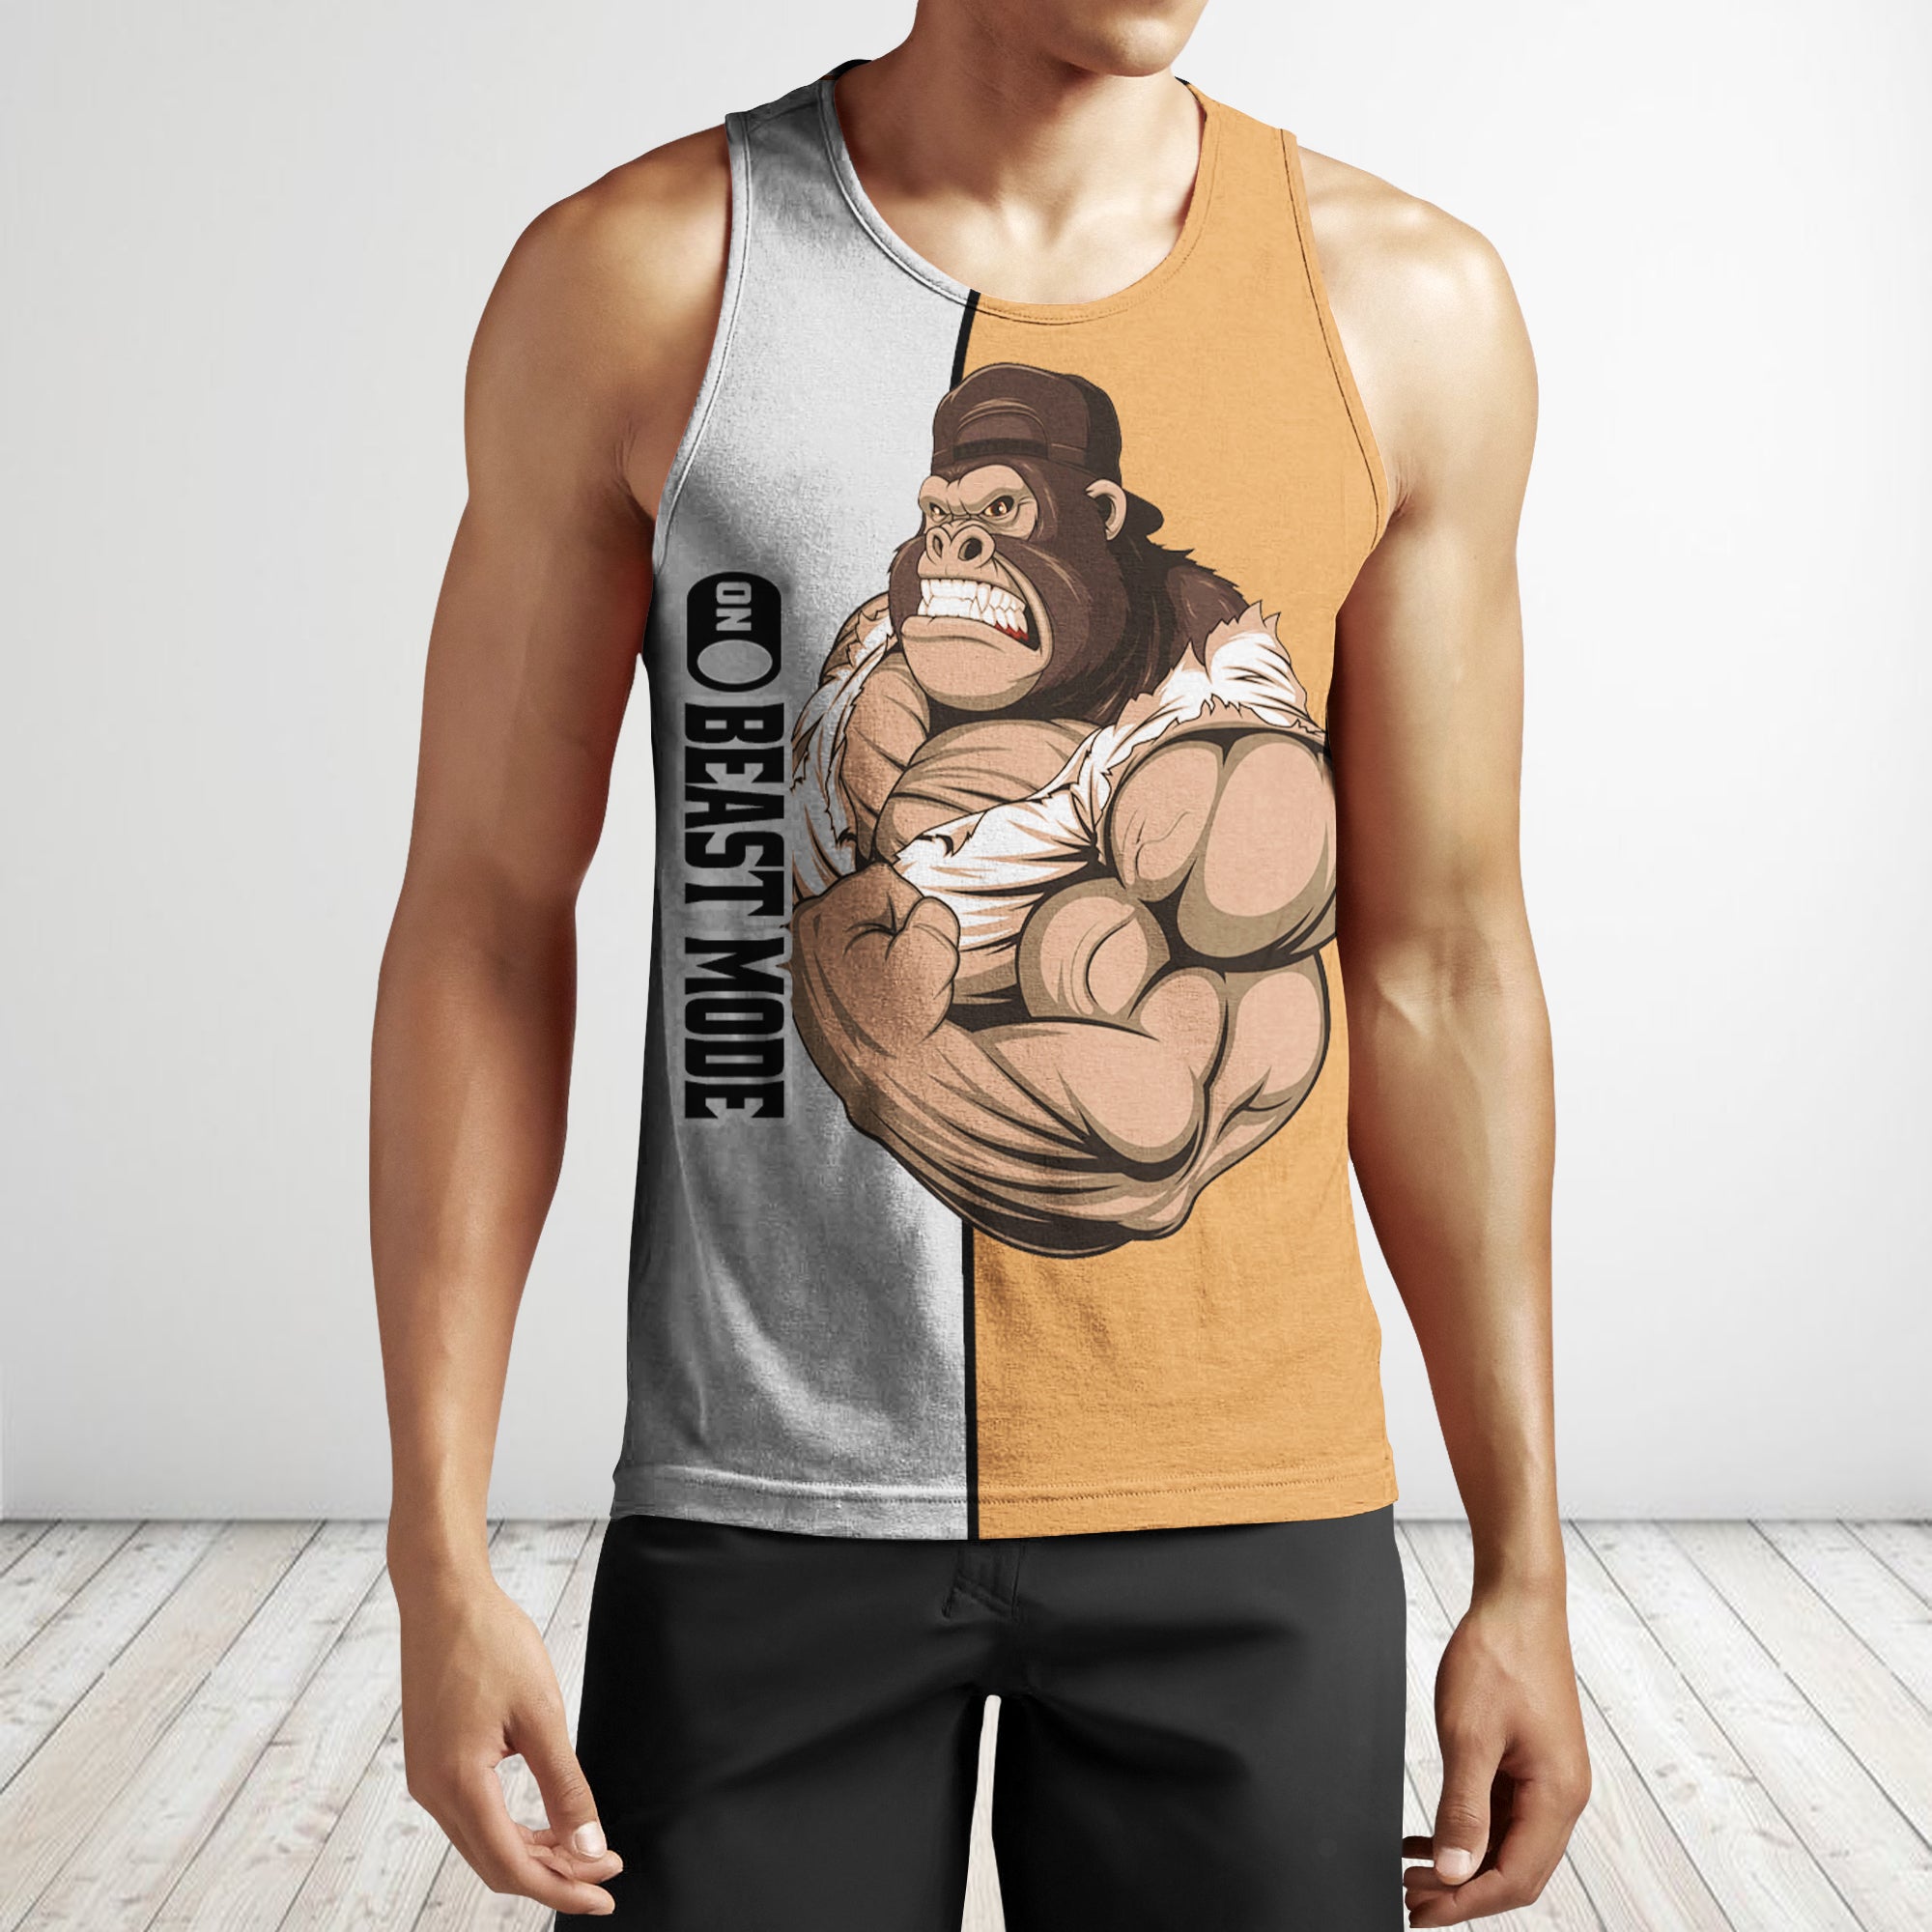 Men Gym Tank Tops Motivational Shirts Gorilla Beast Mode On